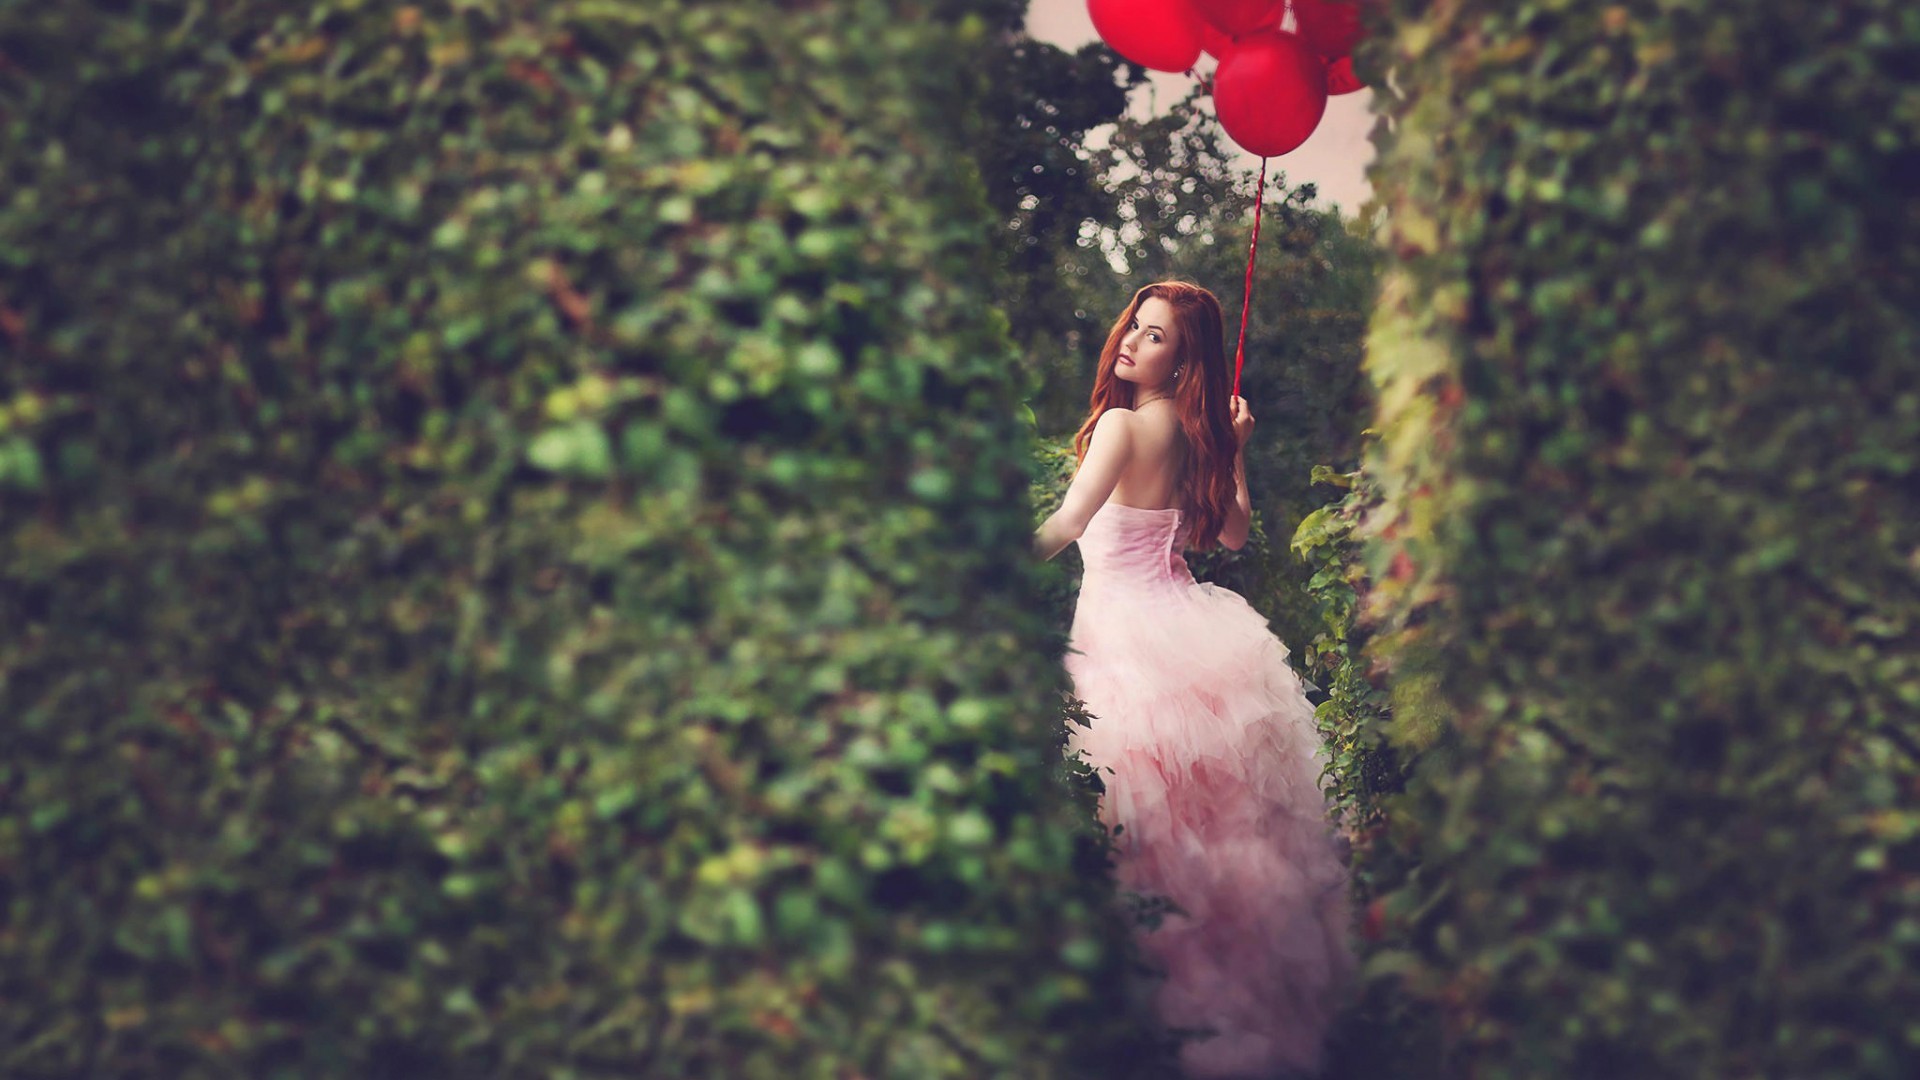 People 1920x1080 women redhead hedges looking back balloon pink dress women outdoors dress model dyed hair